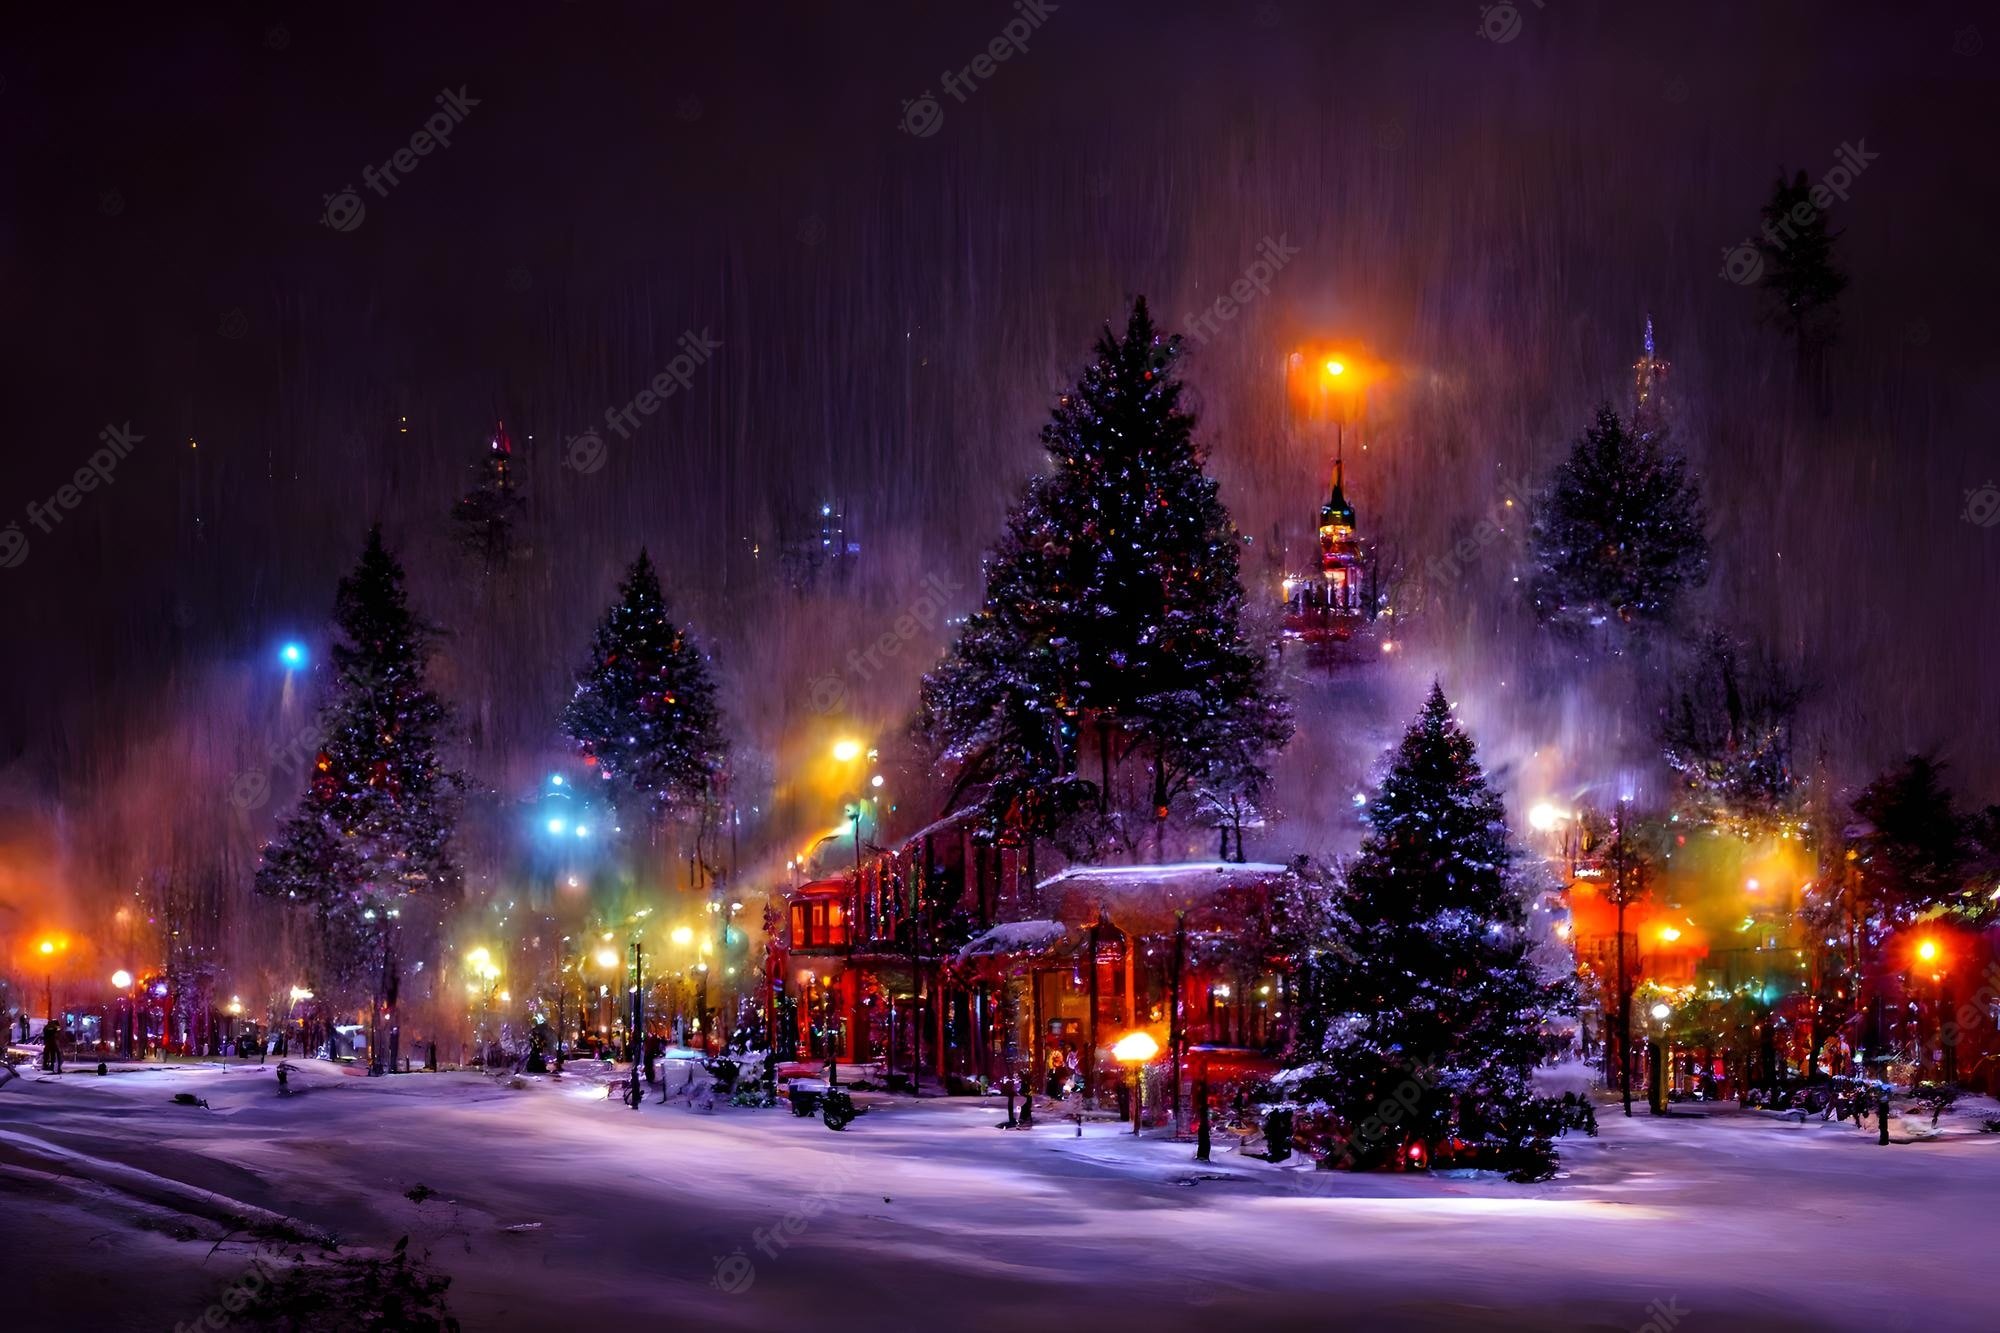 Christmas town Image. Free Vectors, & PSD